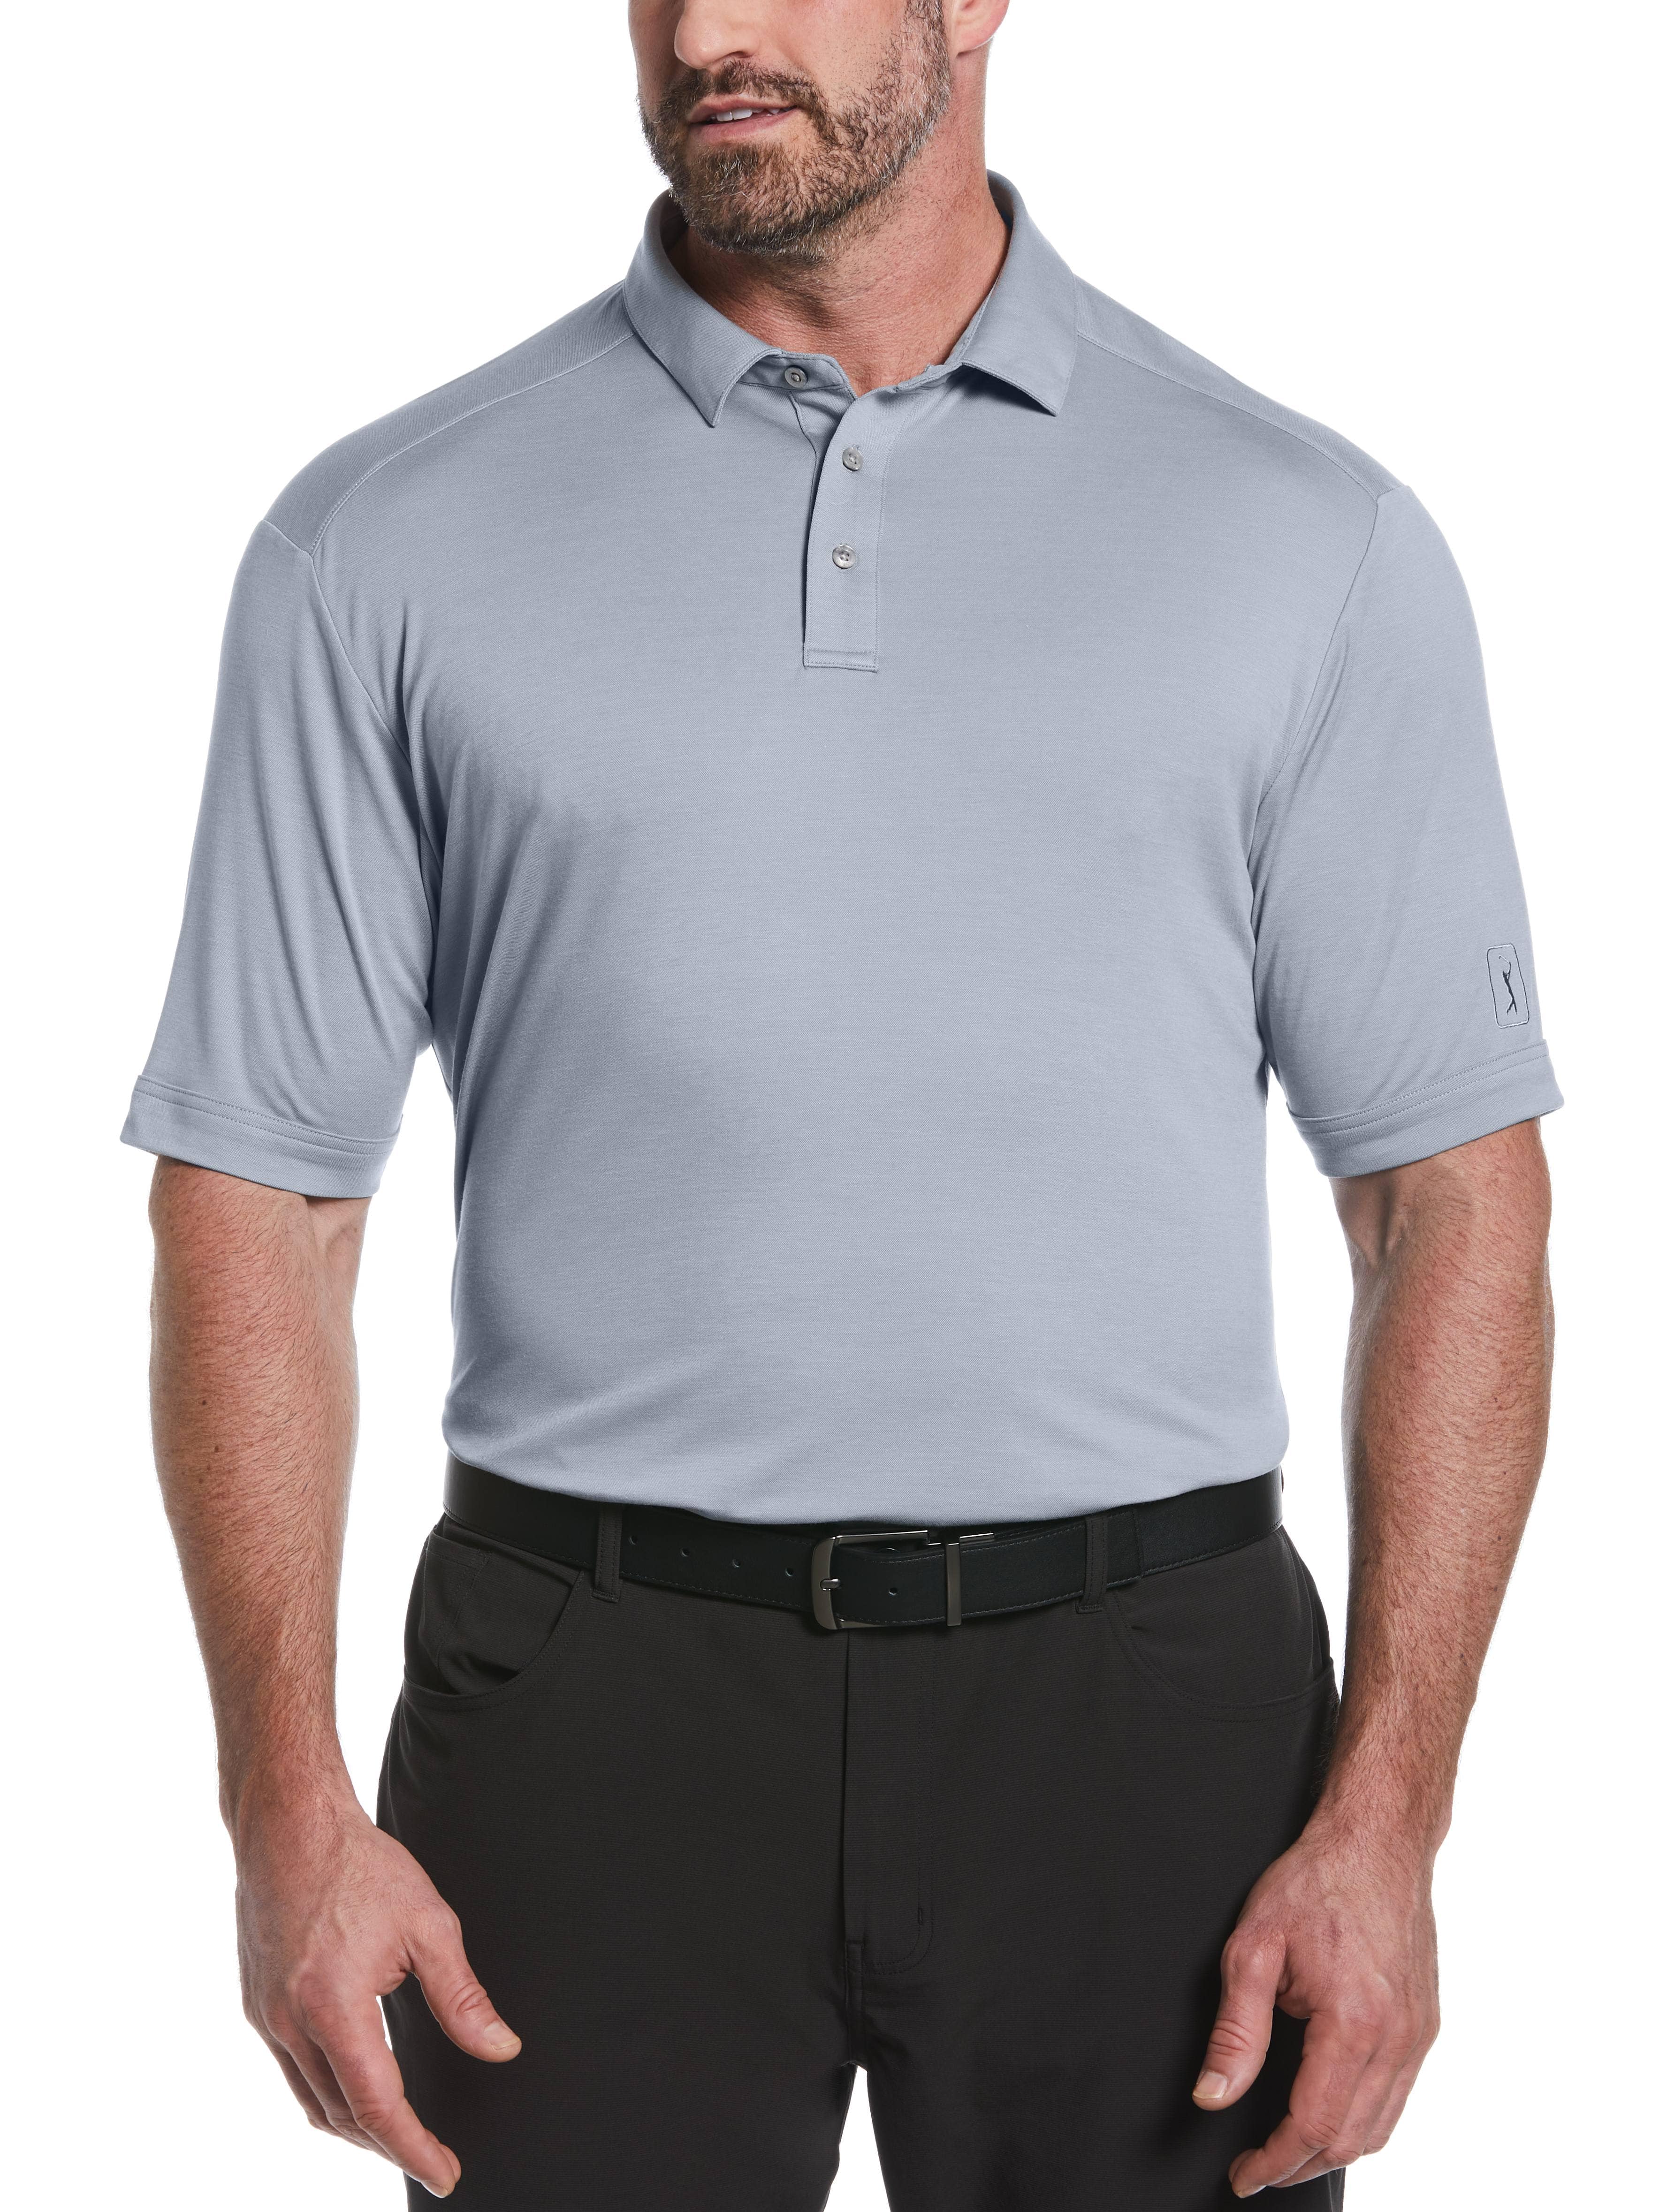 PGA TOUR Apparel Mens Big & Tall Solid Golf Polo Shirt, Size 2X, Tradewinds Heather Gray, Polyester/Viscose/Elastane | Golf Apparel Shop